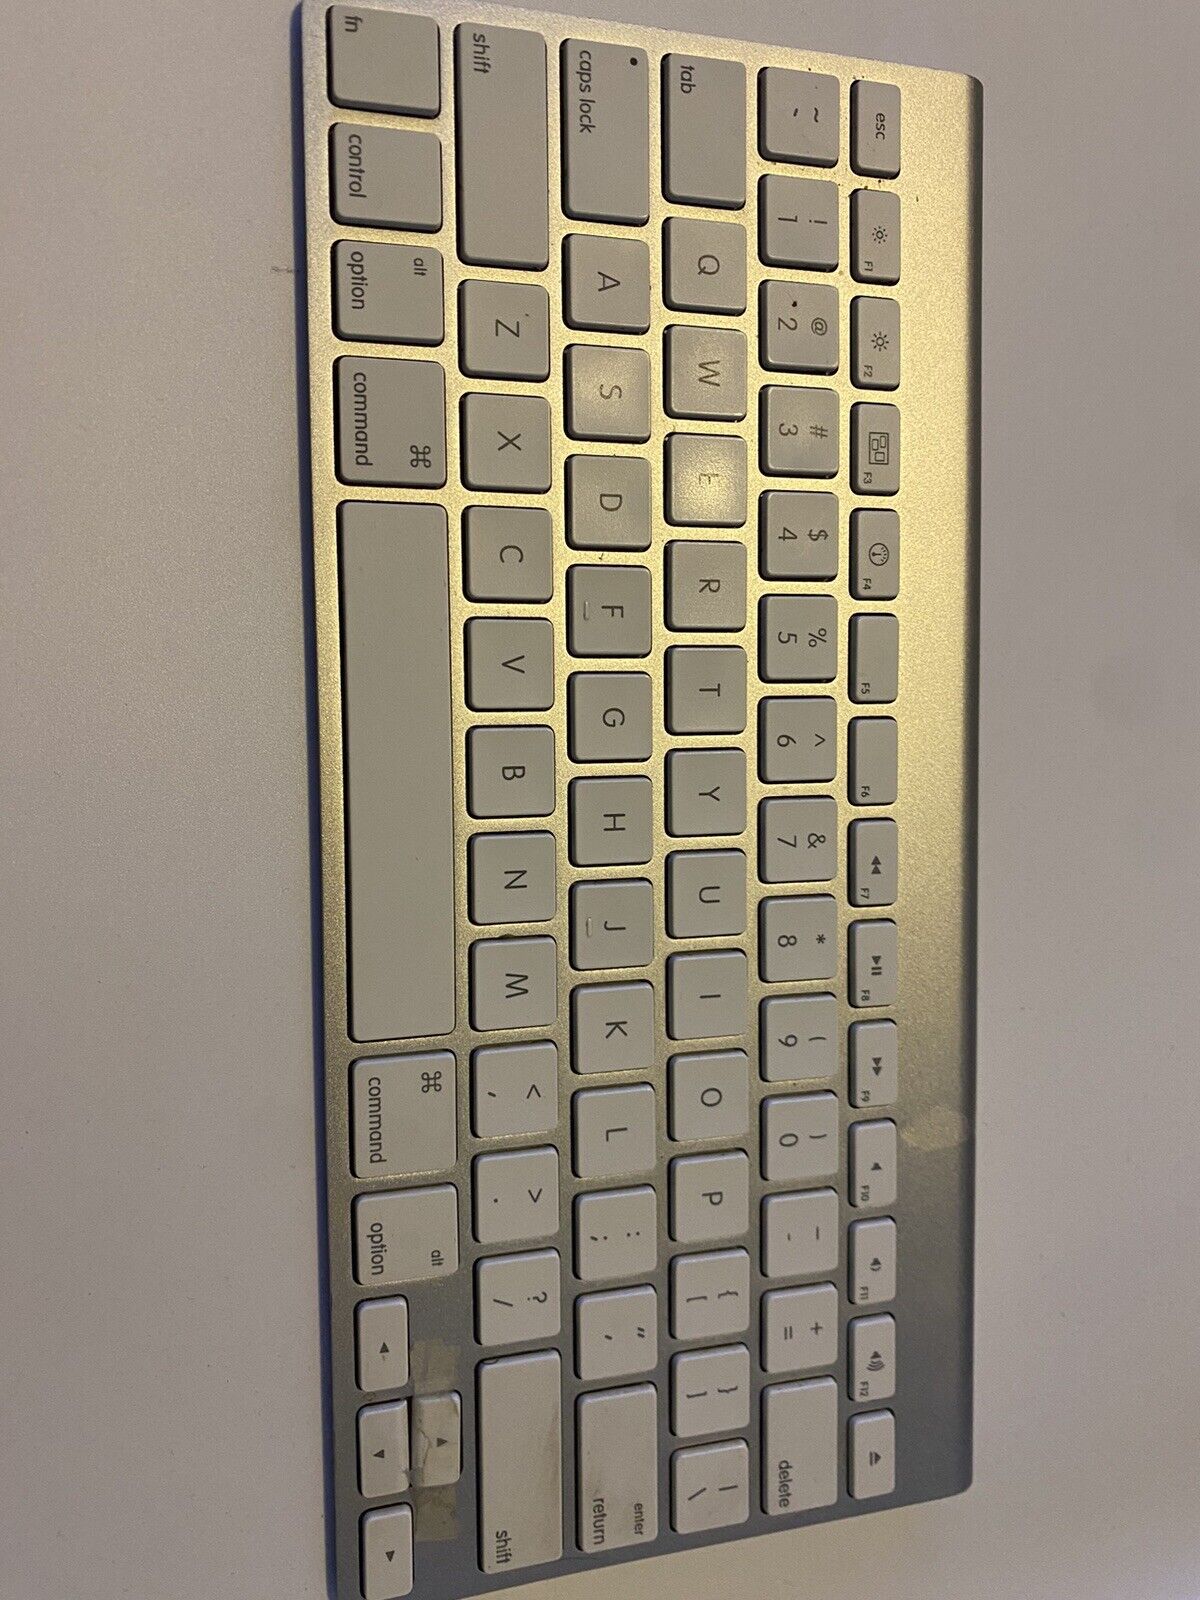 Apple A1314 Bluetooth Wireless Silver Slim Mini Keyboard laptop iMac USA 